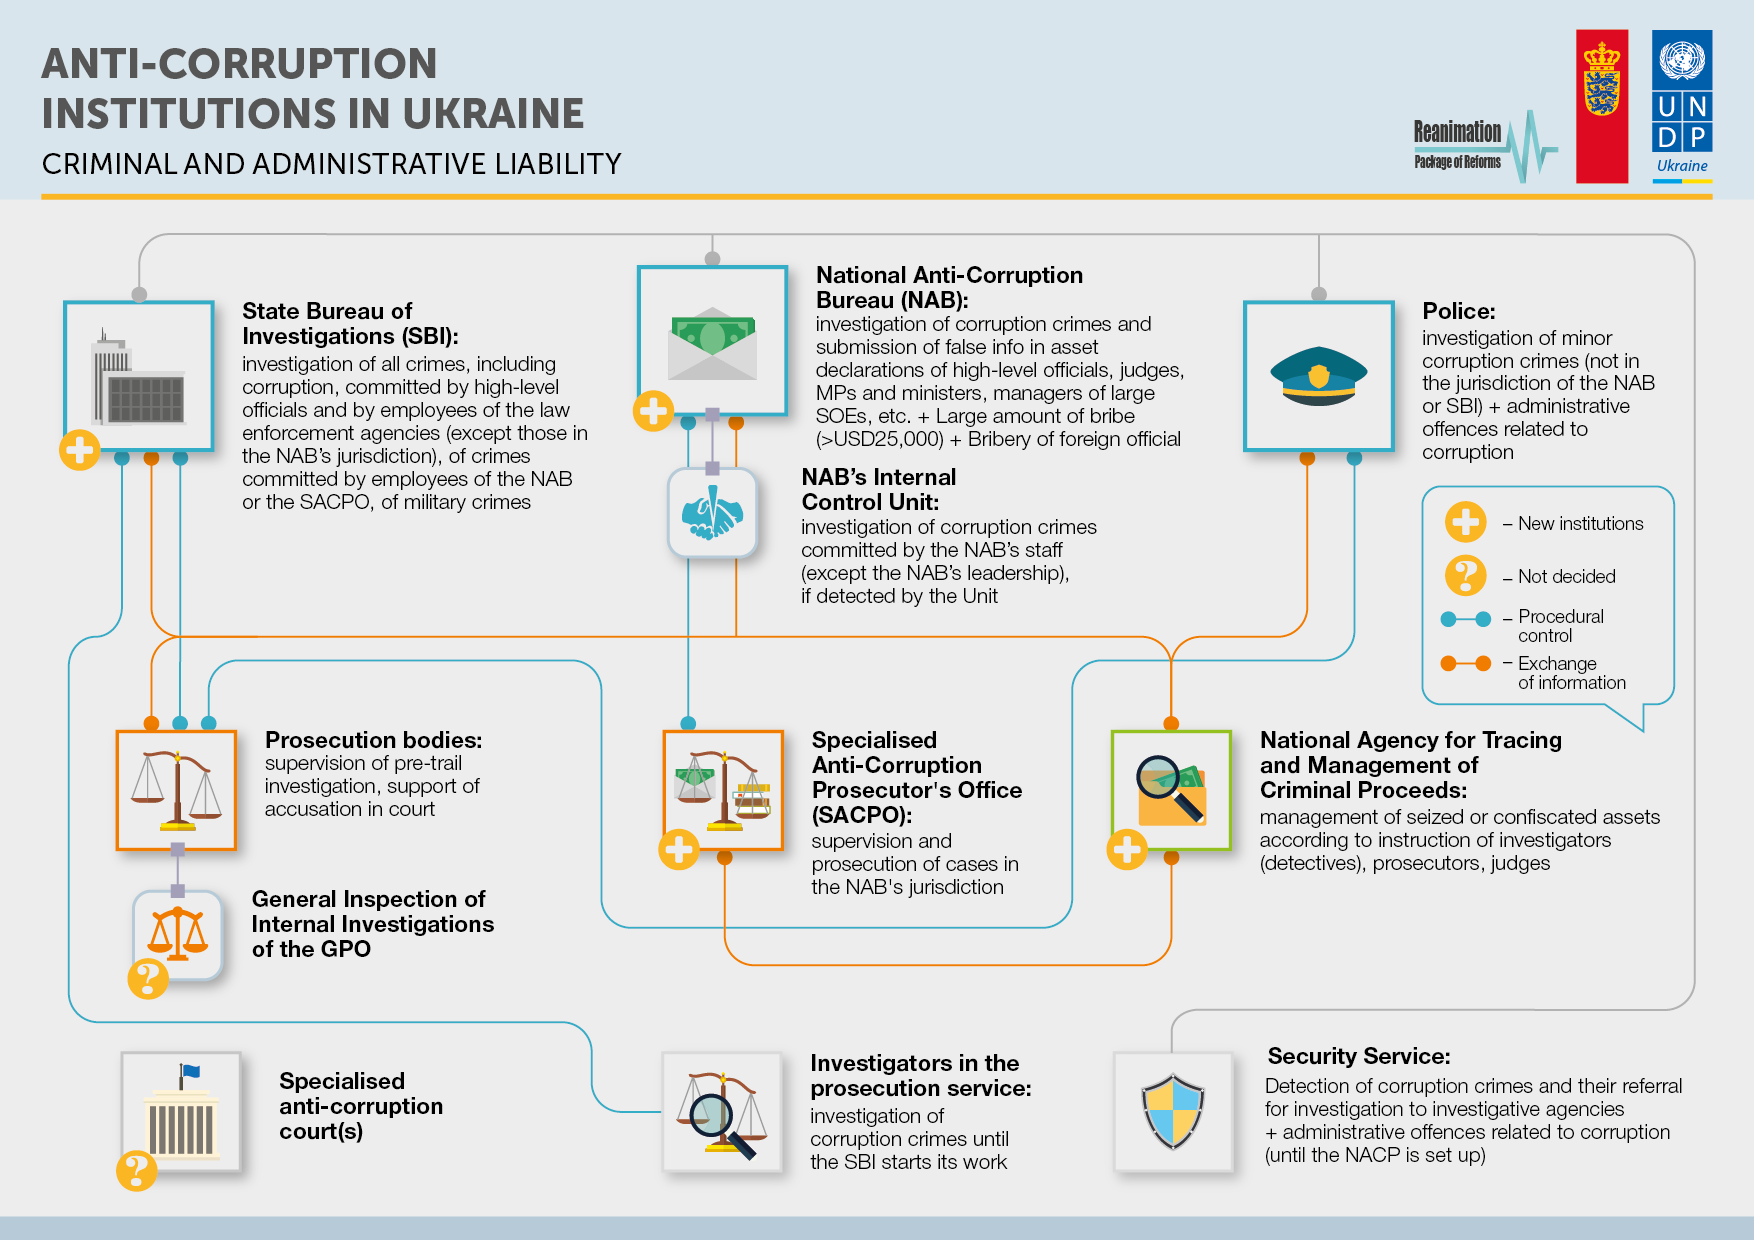 To make Ukraine’s anti-corruption reforms irreversible, keep up the international pressure #UAreforms ~~